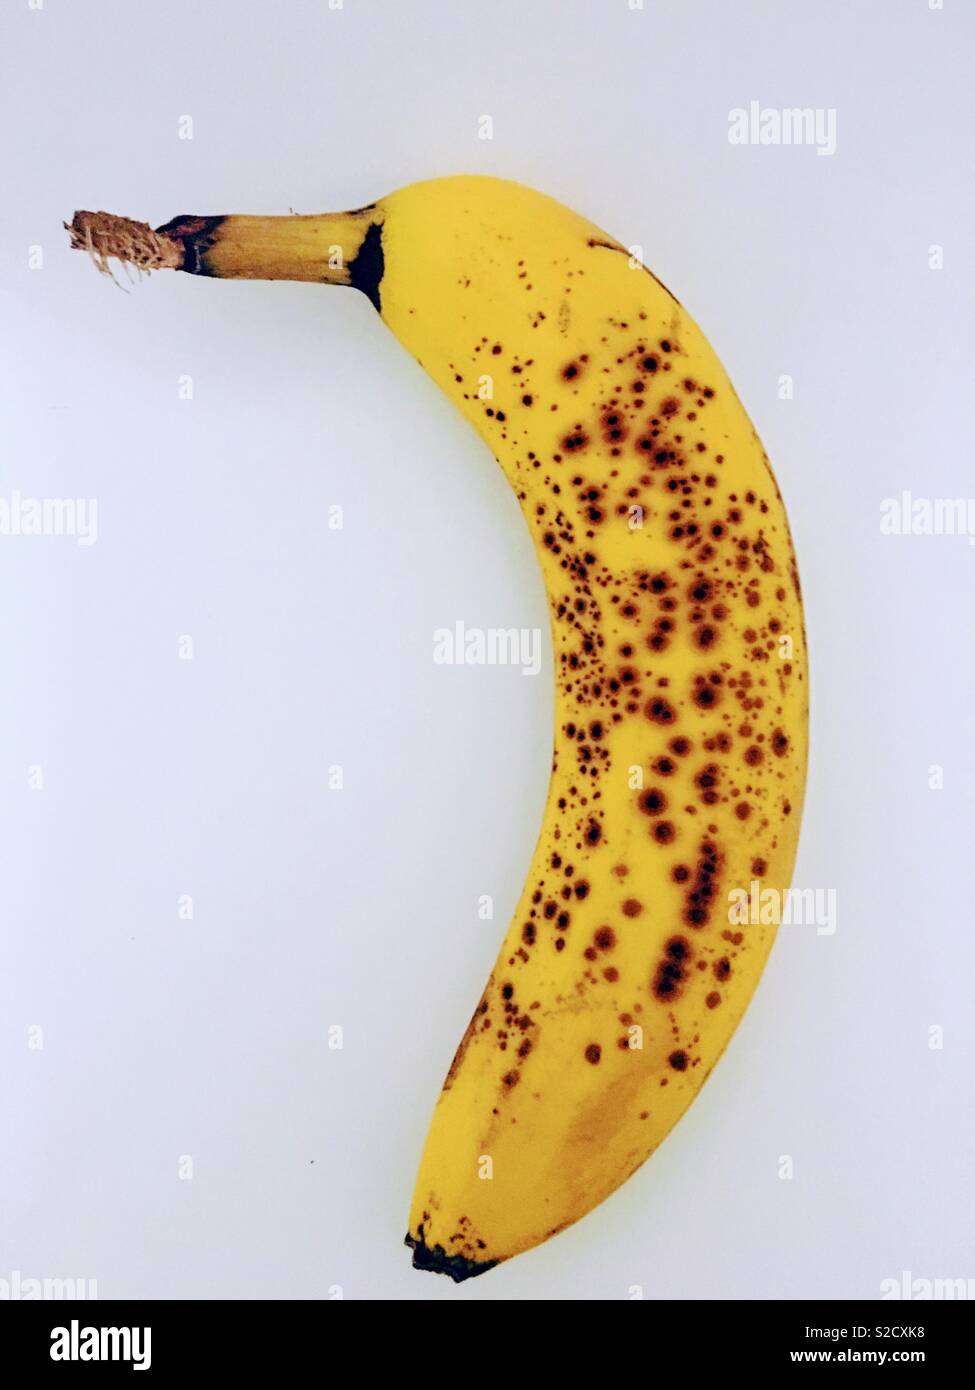 Banana With brown skin. Stock Photo